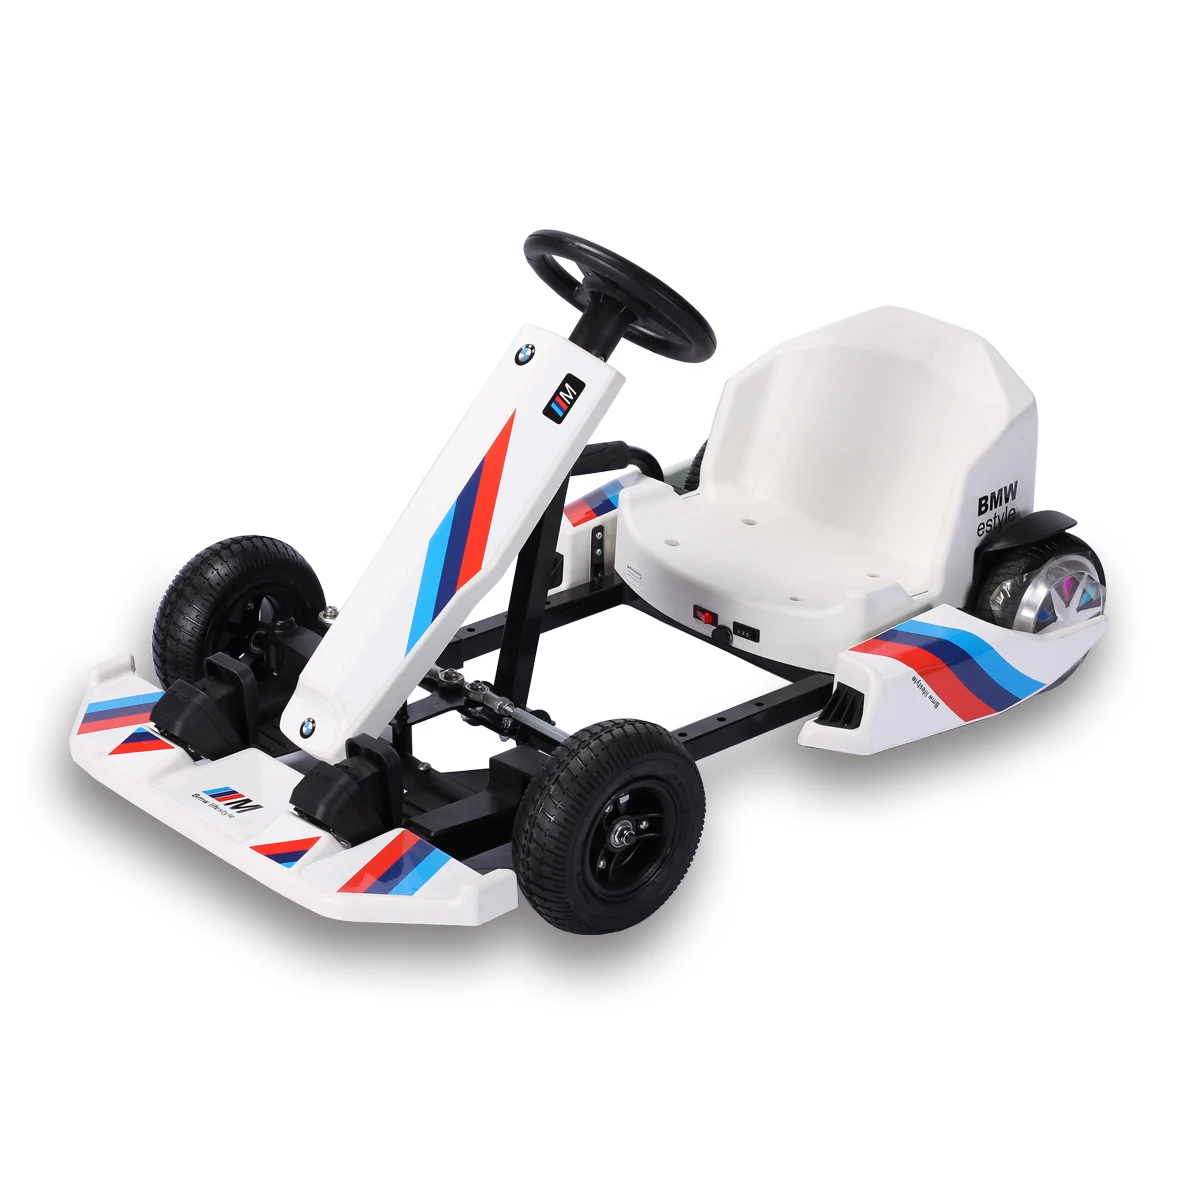 
Good Business Custom Street Legal 200cc Engine Adult/ Kids Racing Electric Go Karts Karting Cars for Sale  (62424612149)